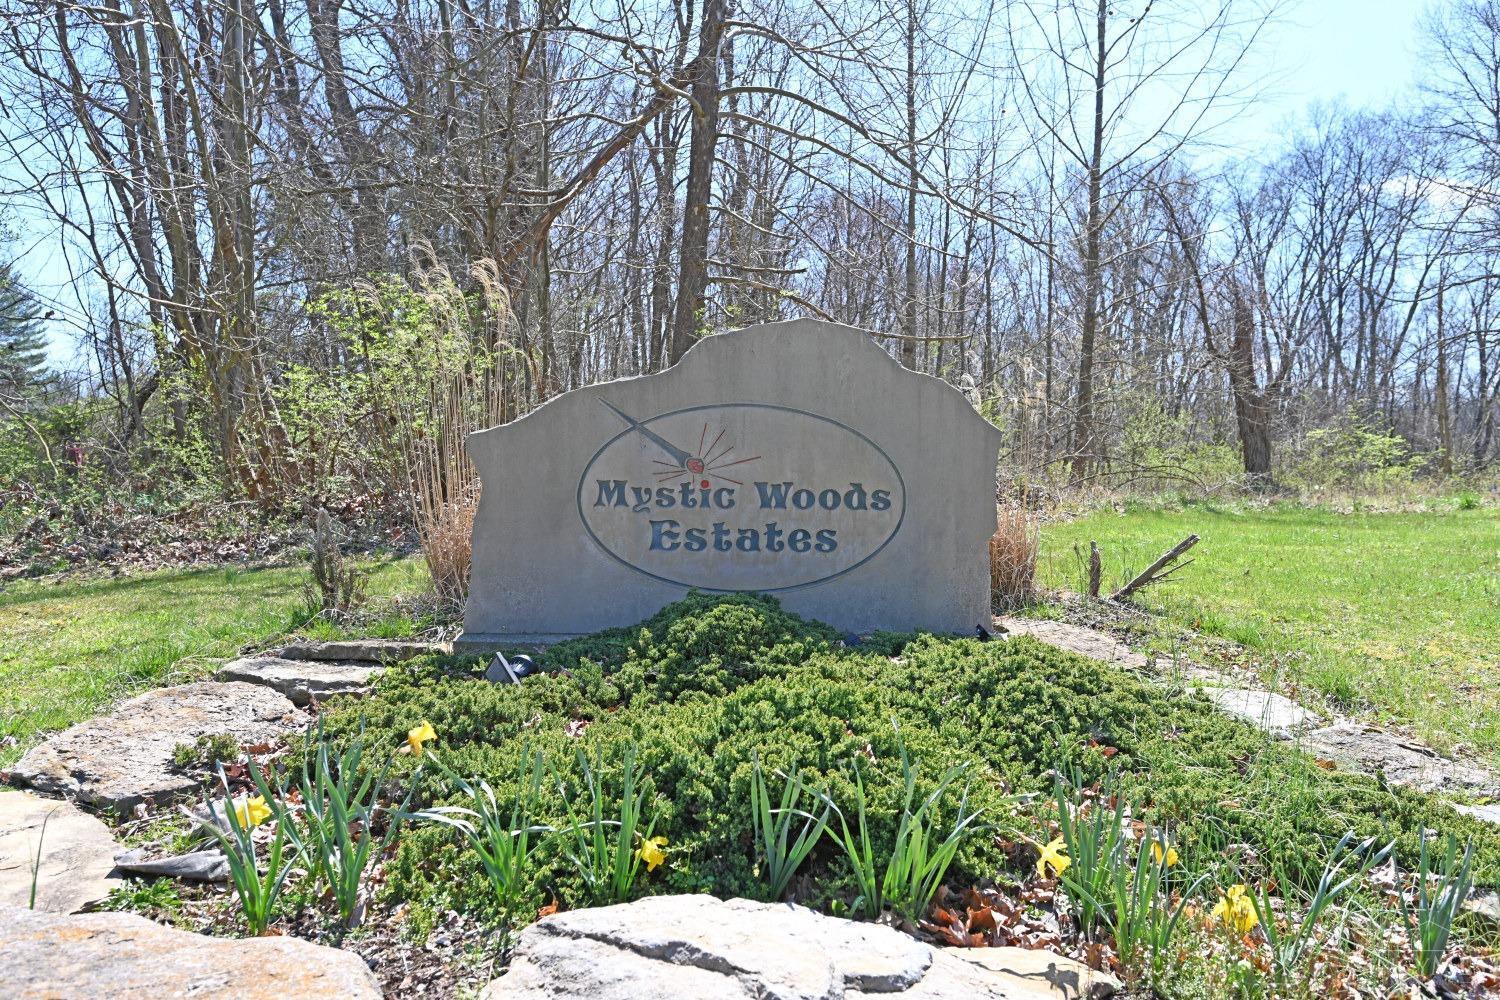 0 Mystic Woods Dr 4.759ac, New Richmond, OH 45157